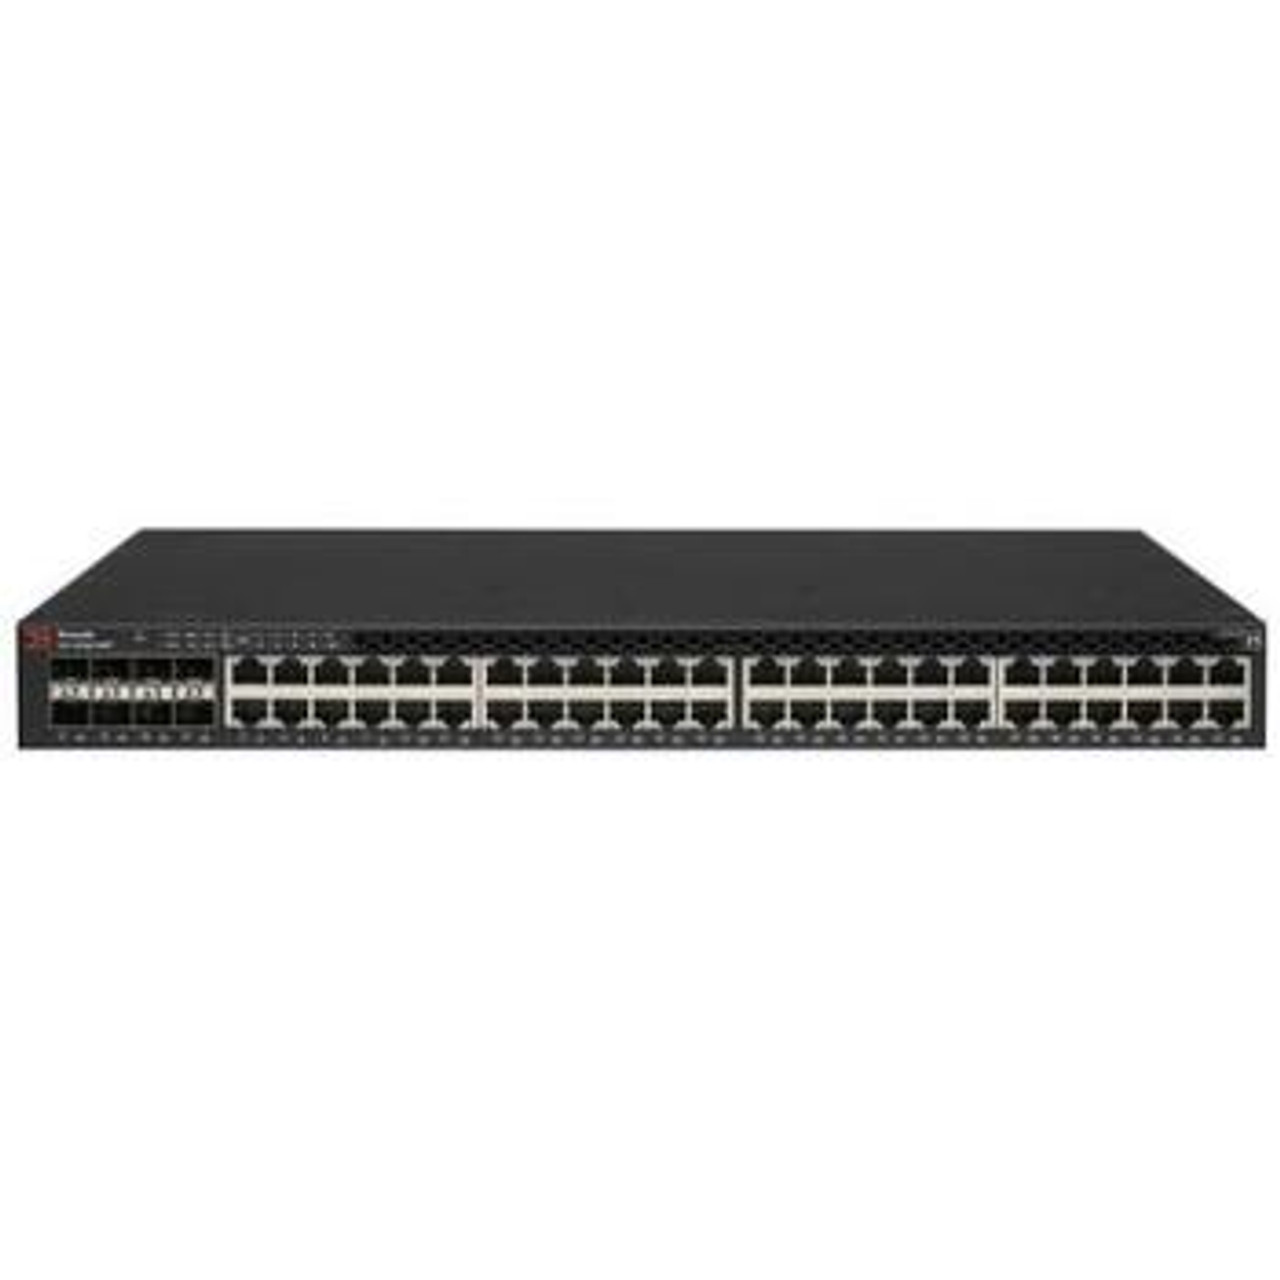 ICX6610-48-I Brocade 48-Ports 1G RJ45 plus 8 x 1G SFPP Uplink Port Switch